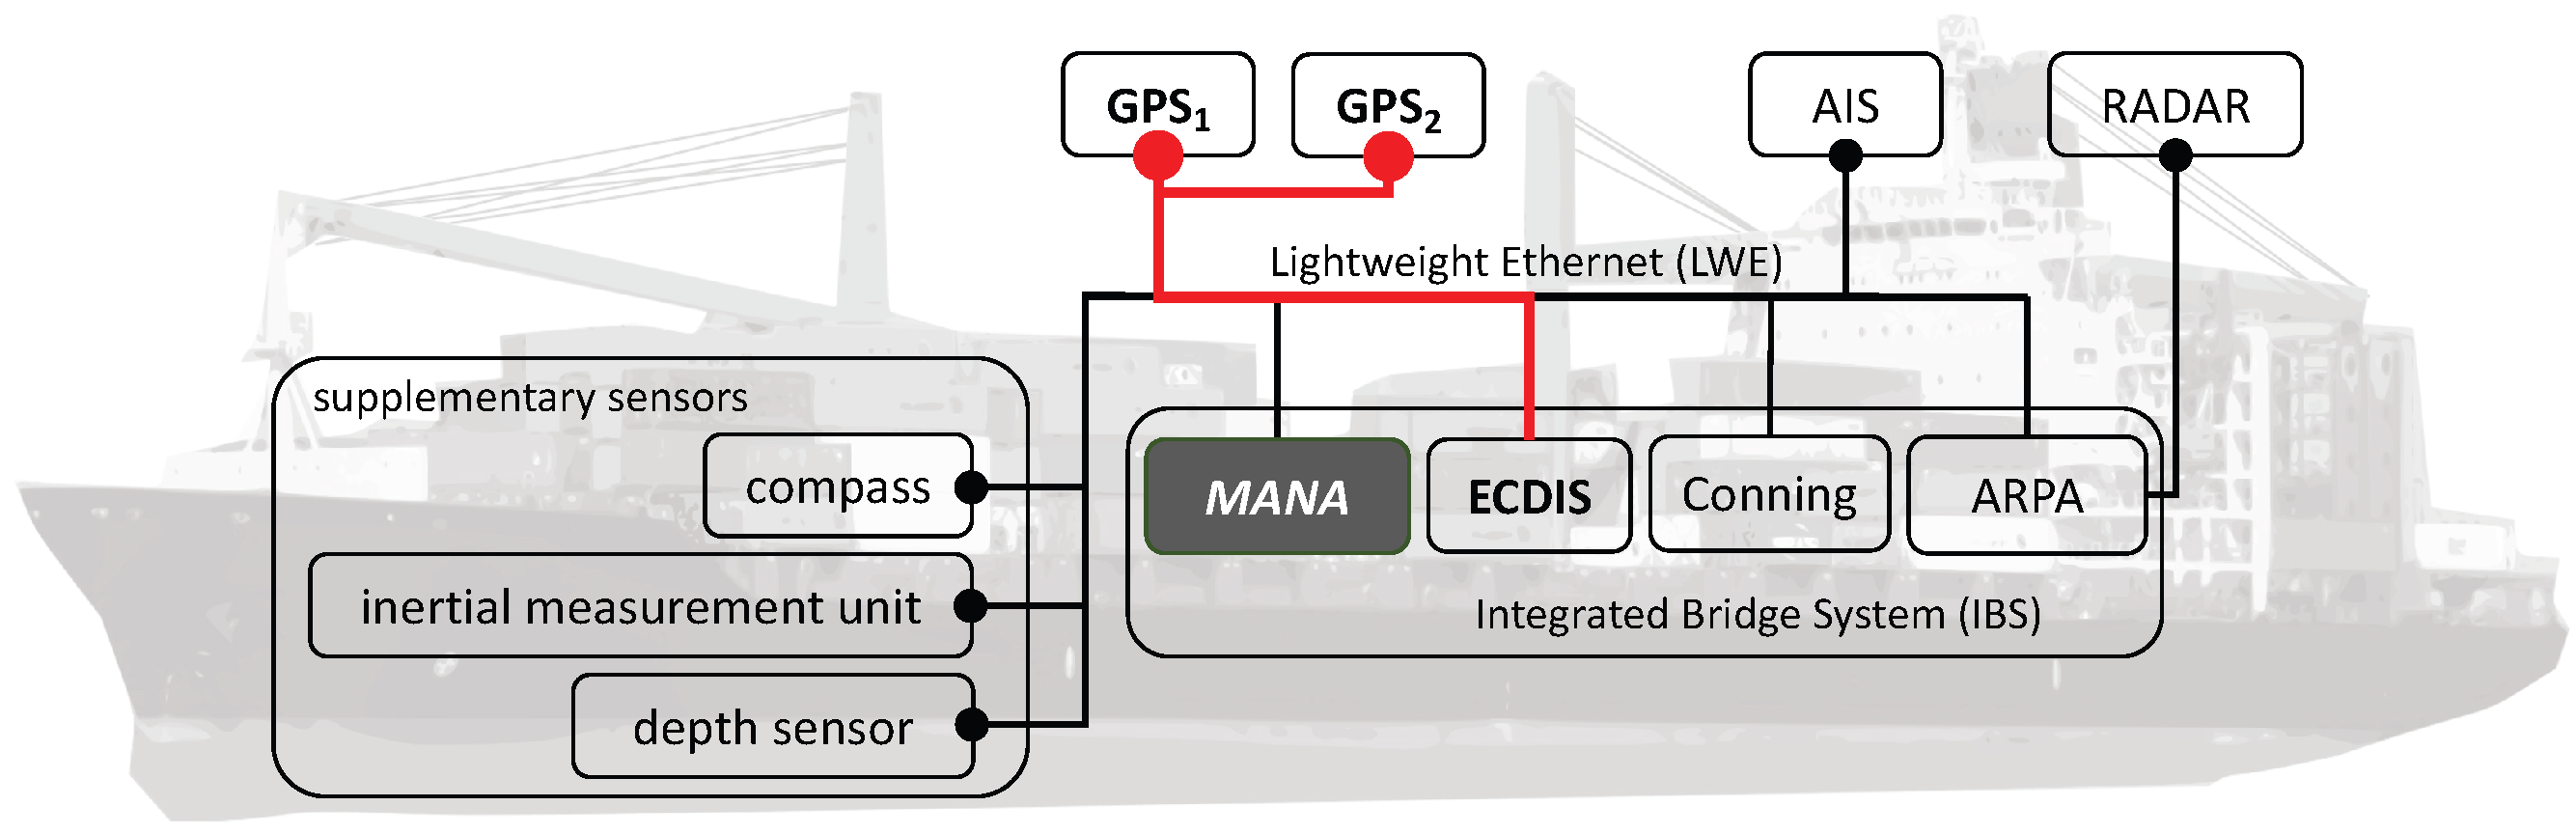 JMSE | Free Full-Text | Detecting Maritime GPS Spoofing Attacks Based on  NMEA Sentence Integrity Monitoring